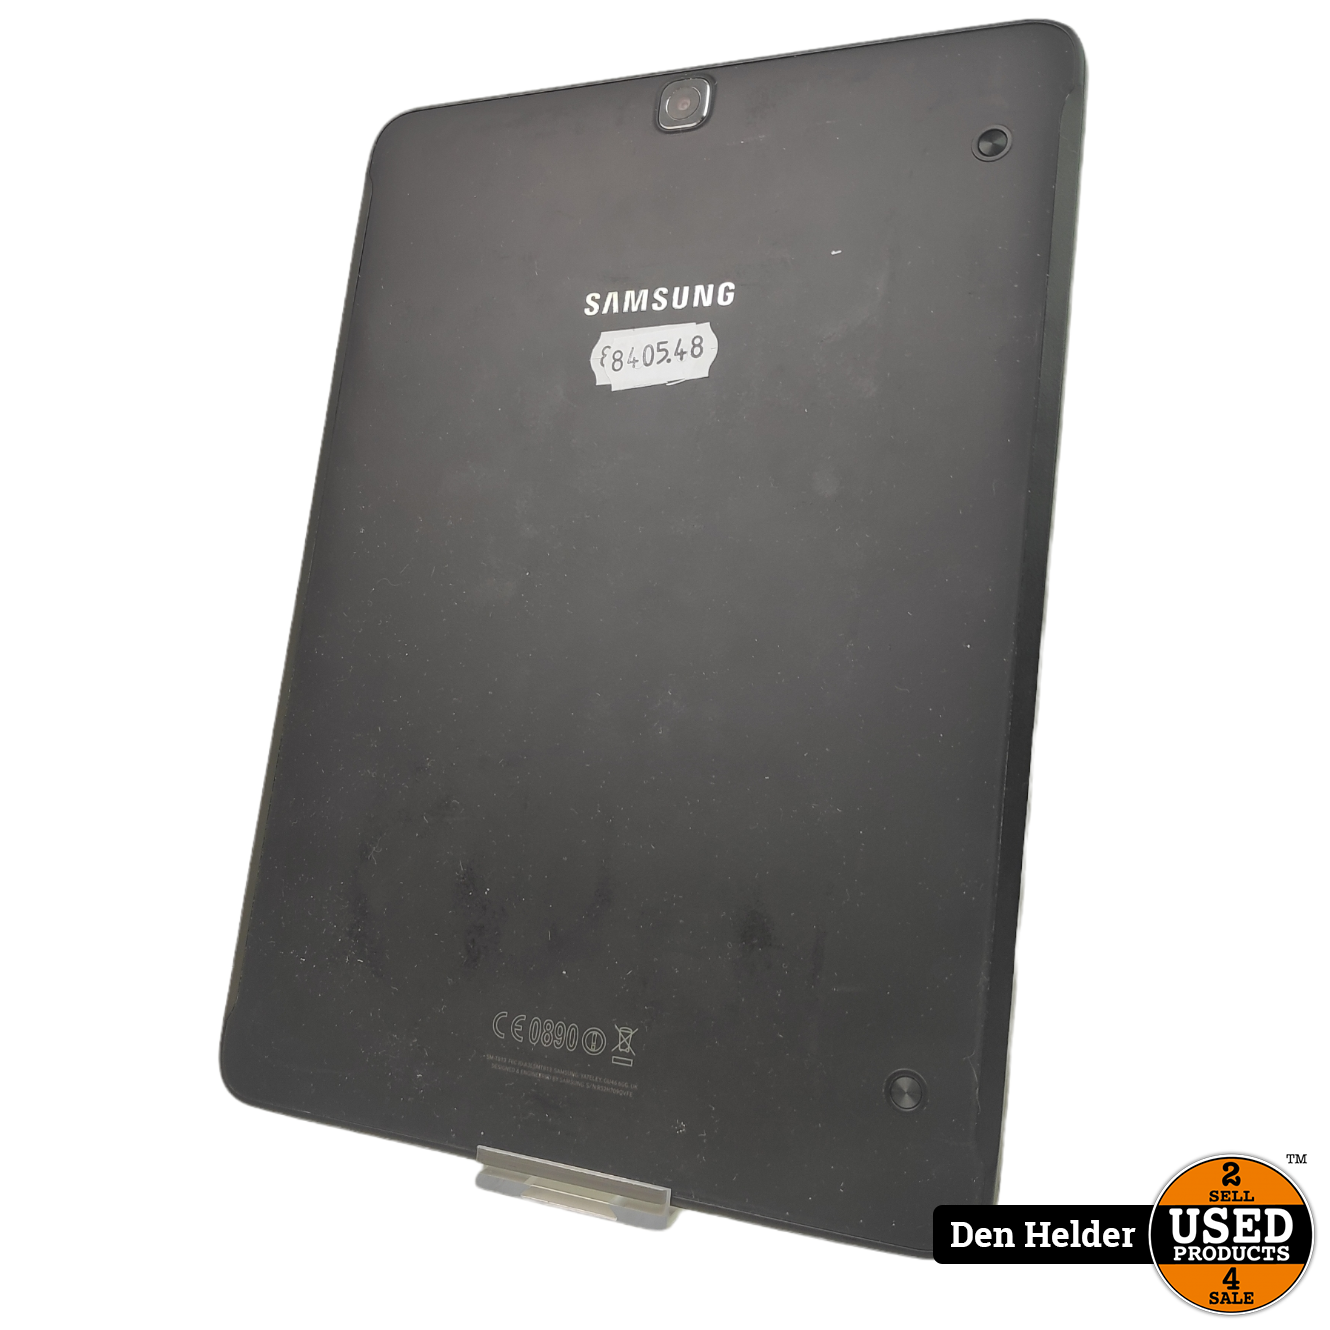 Raap Afkorten Manga Samsung Galaxy Tab S2 32GB Zwart - In Goede Staat! - Used Products Den  Helder